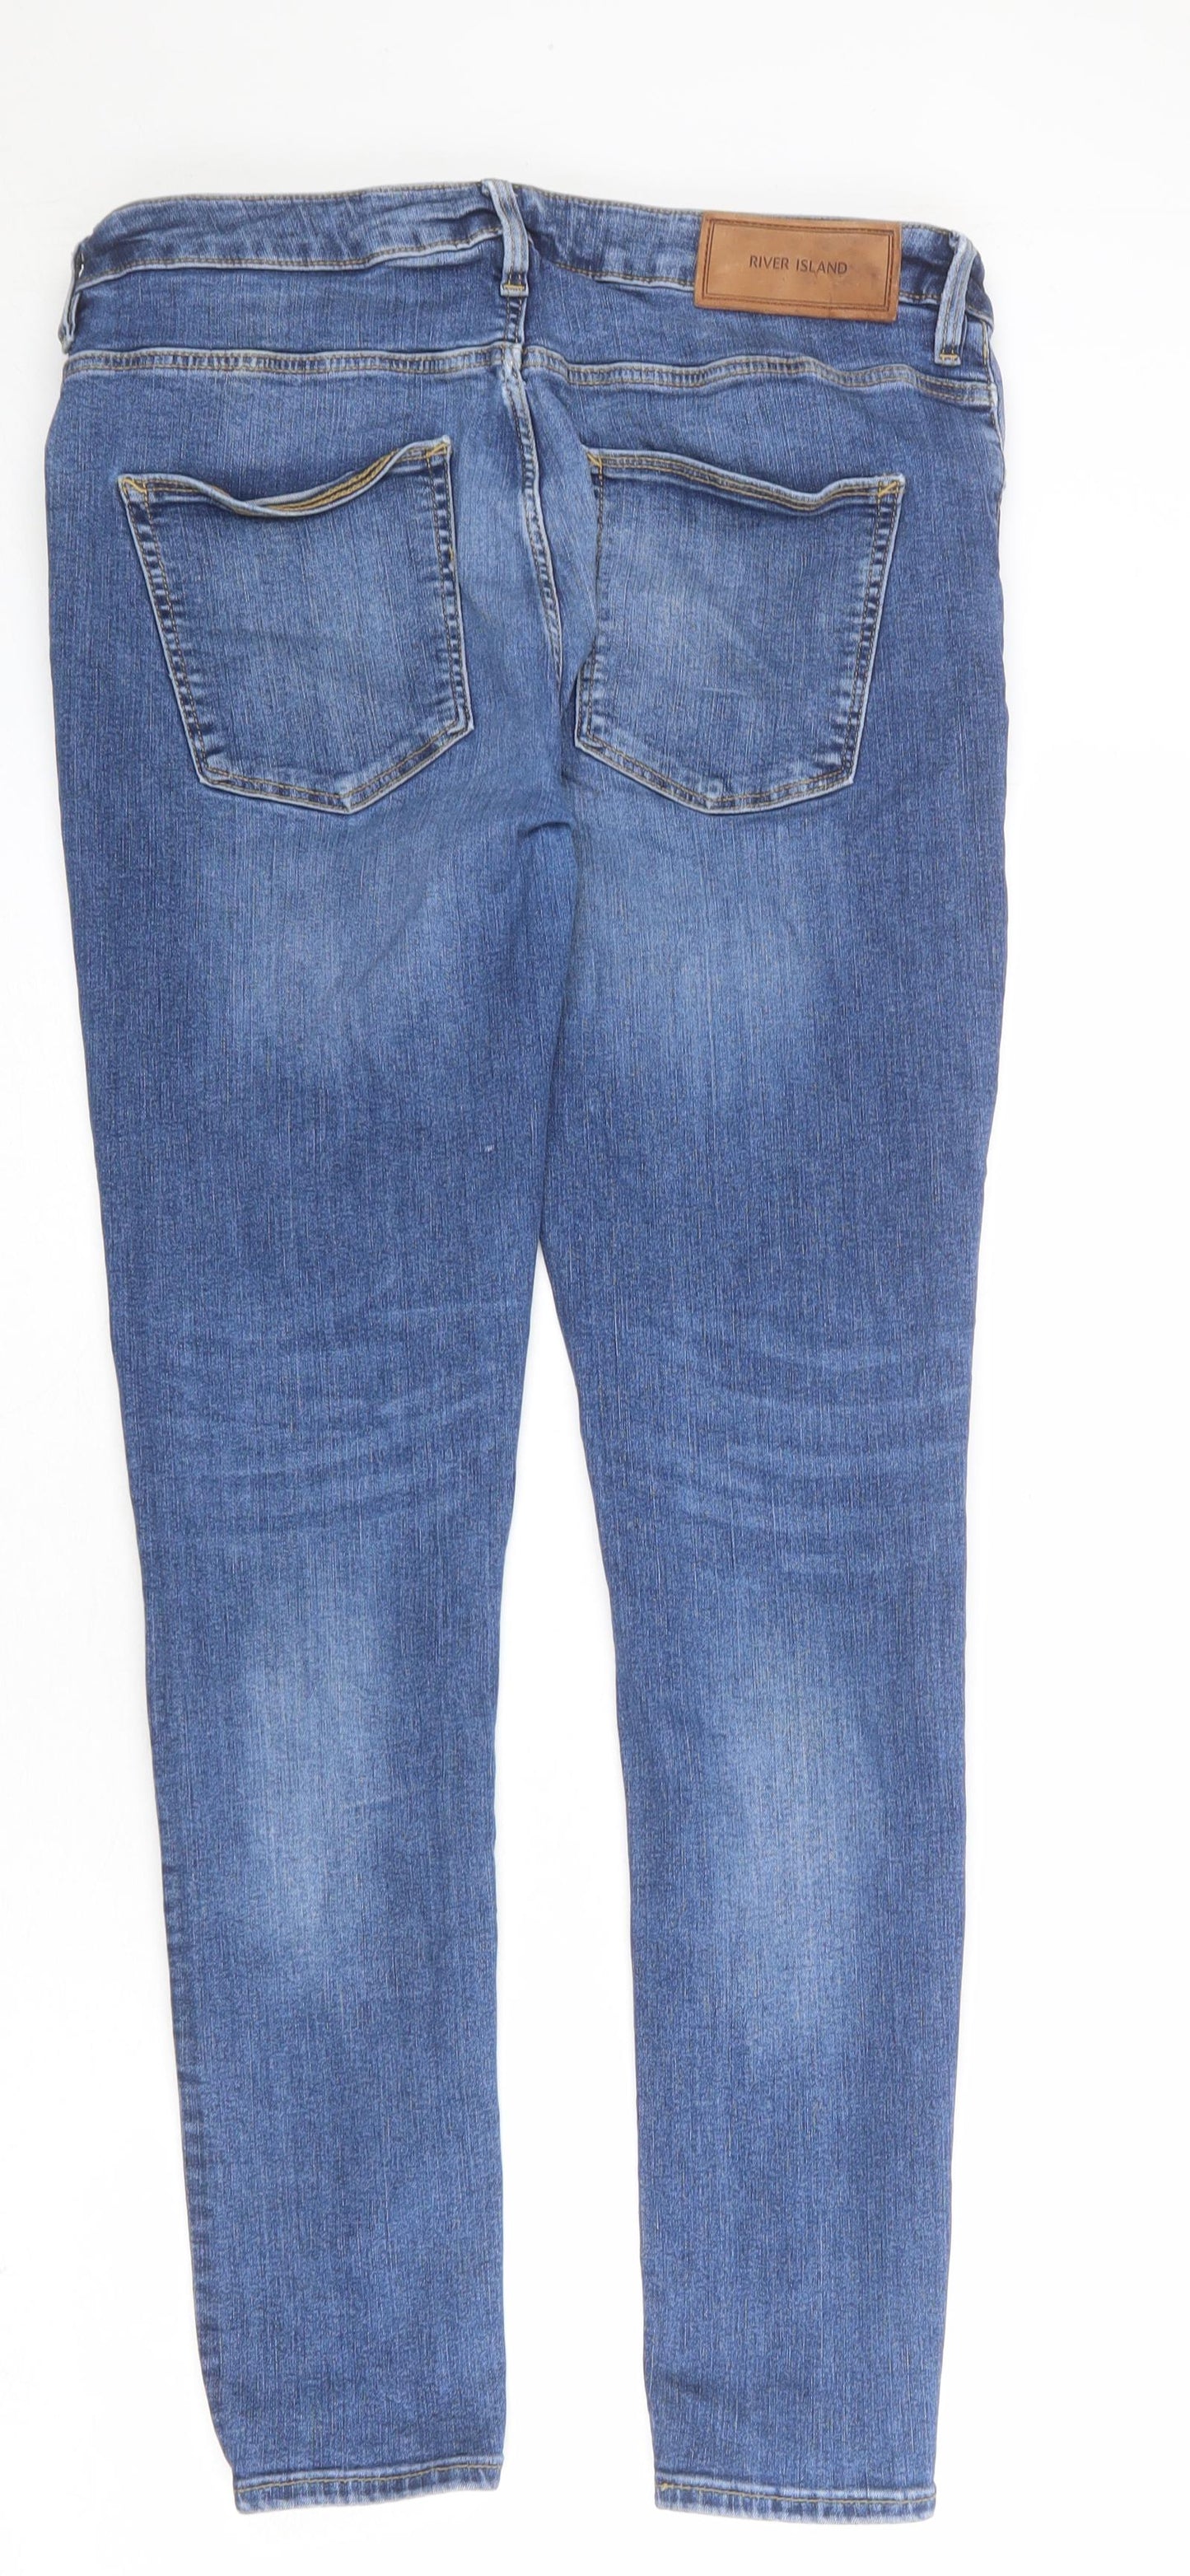 River Island Mens Blue Cotton Skinny Jeans Size 32 in L32 in Regular Zip